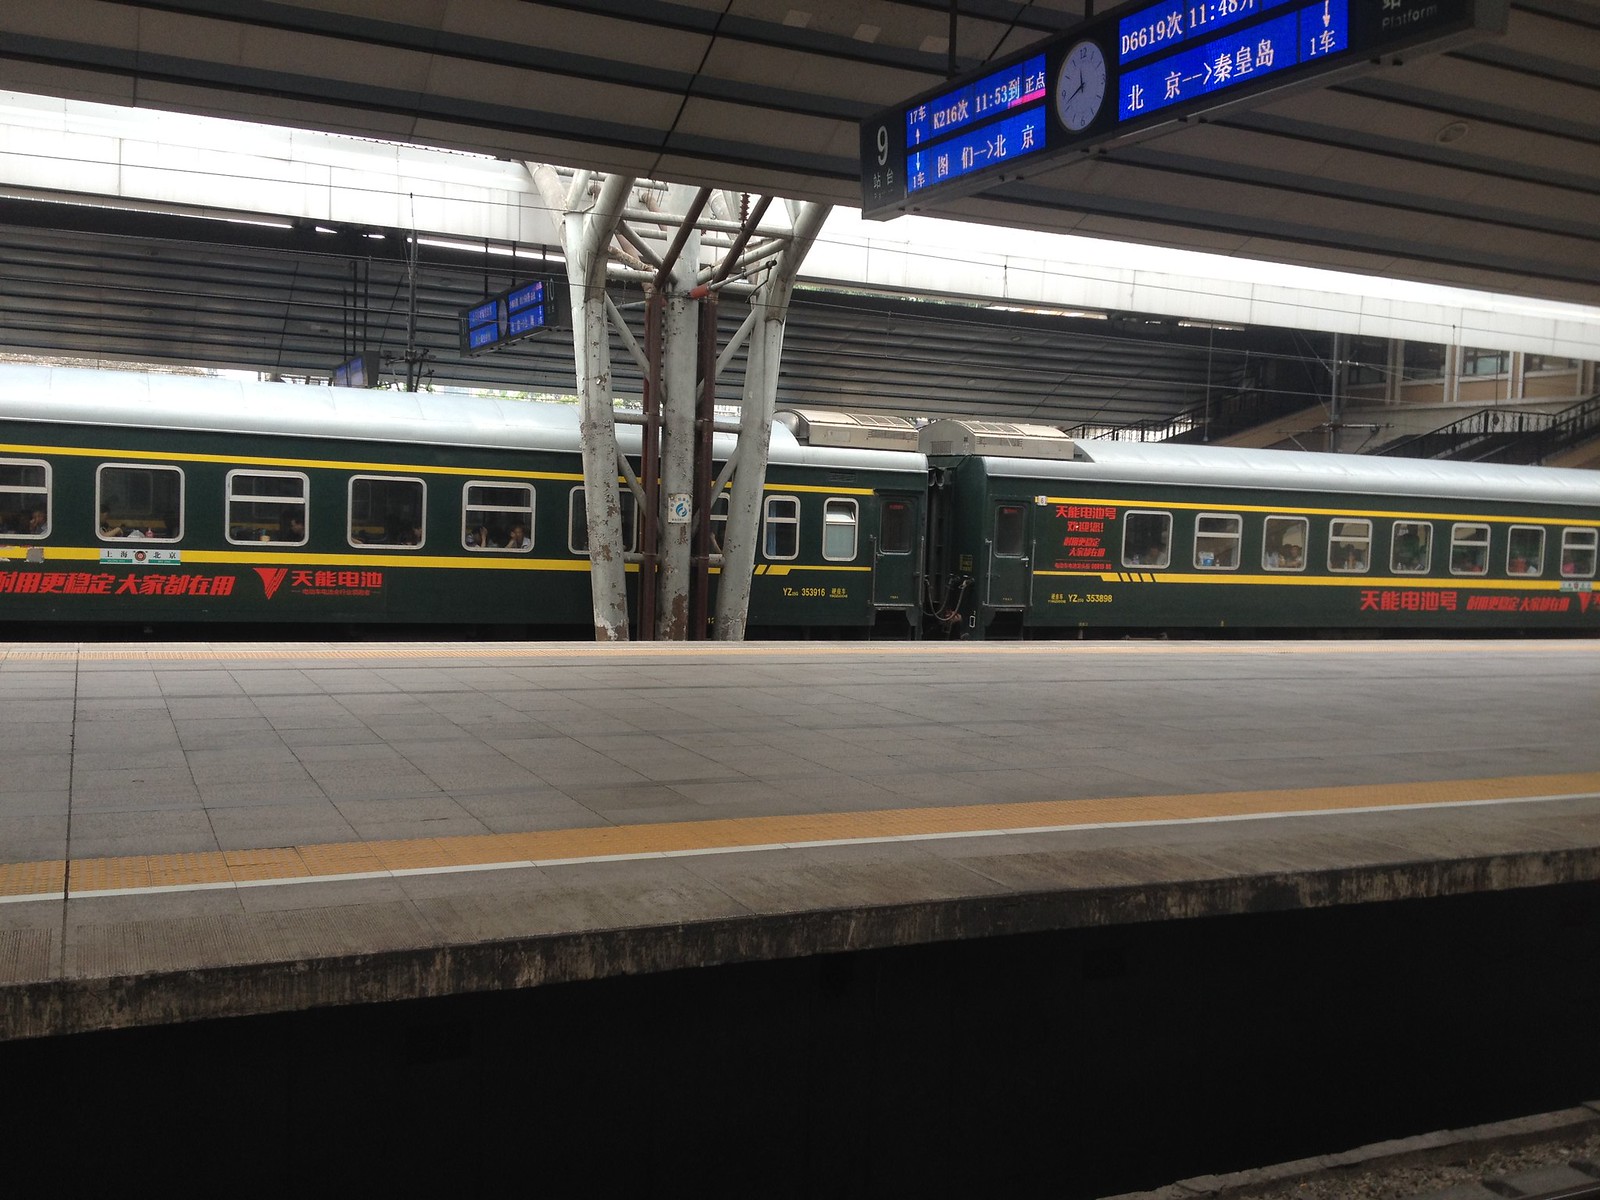 Dream Trip: How To Book The Trans-Siberian / Trans-Mongolian Railroad